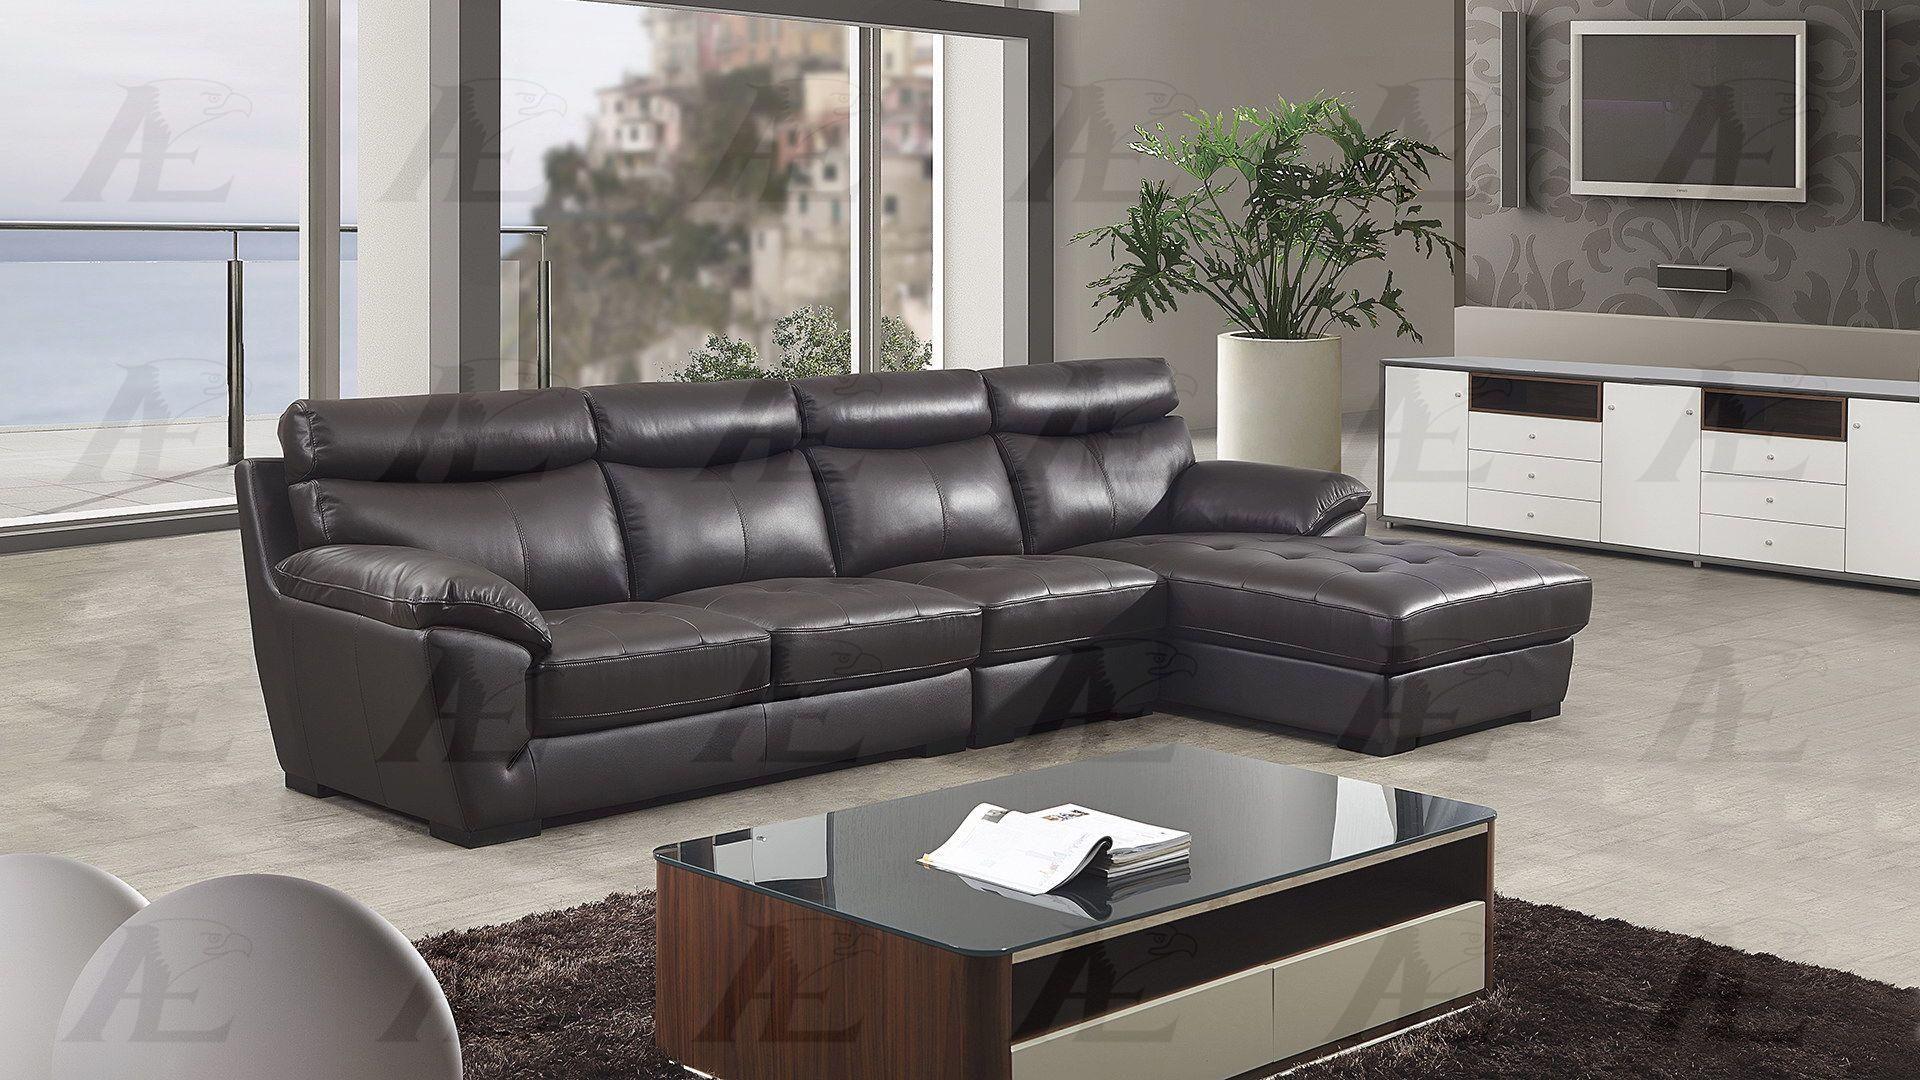 

    
American Eagle Furniture EK-L021-DC Sectional Sofa Dark Chocolate EK-L021L-DC
